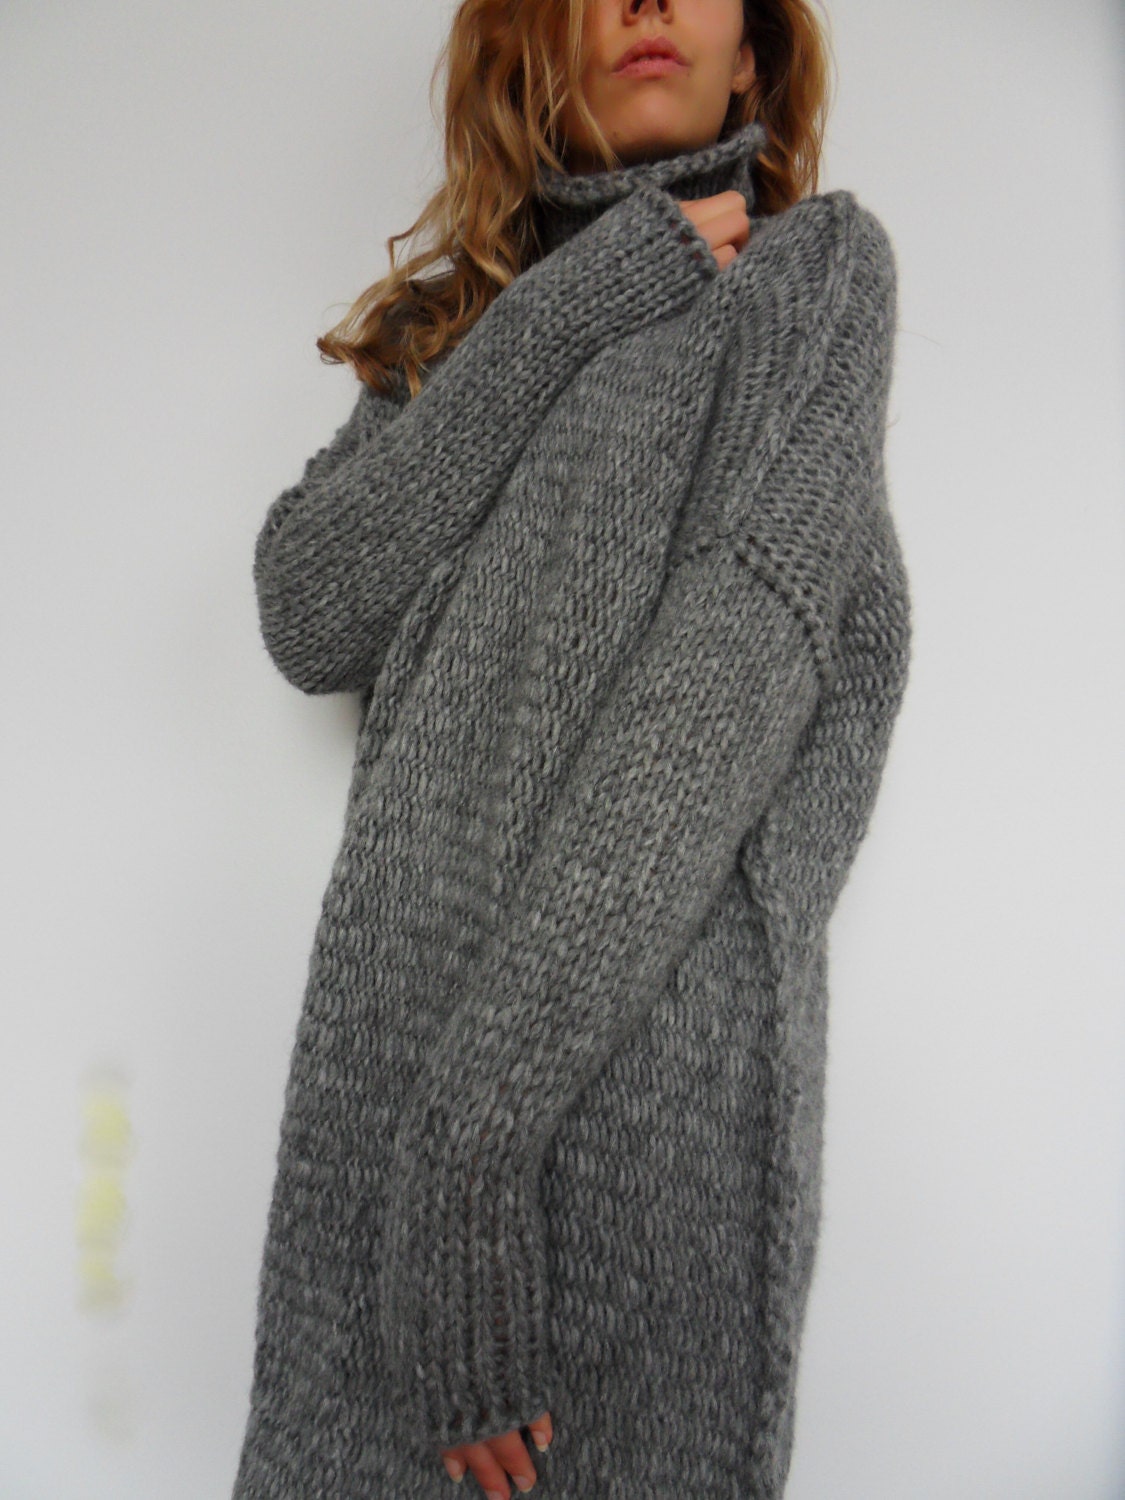 Oversized Slouchy Loose Knit Sweater. Alpaca Chunky Knit Women - Etsy